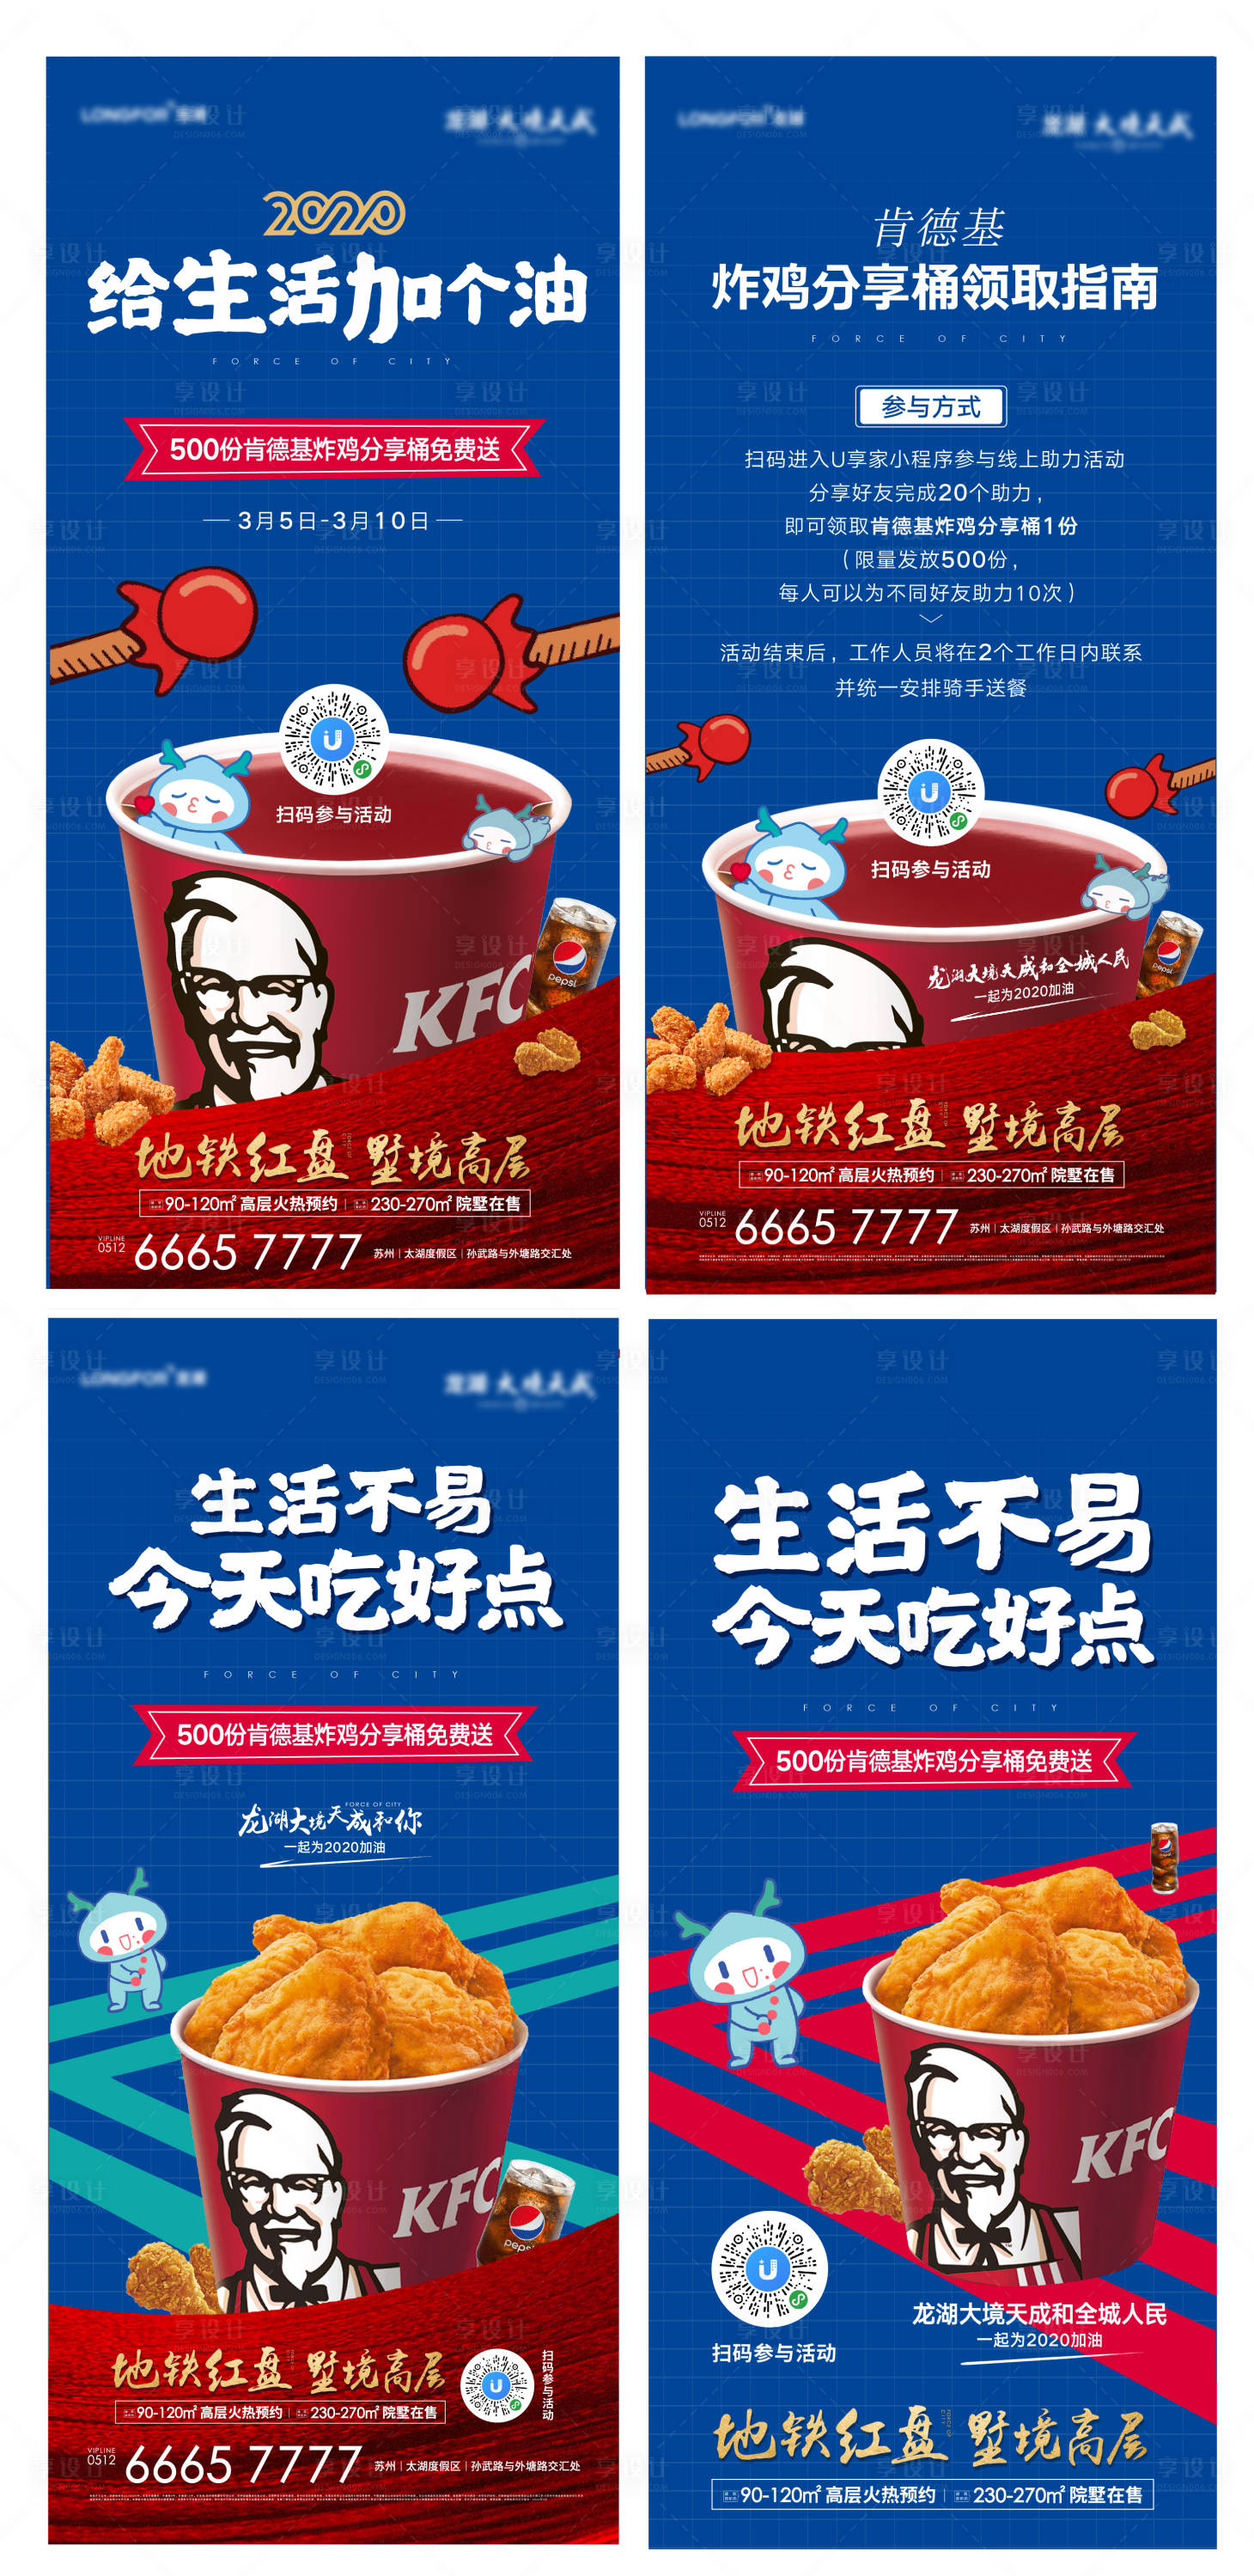 KFC Russia. Redesign on Behance